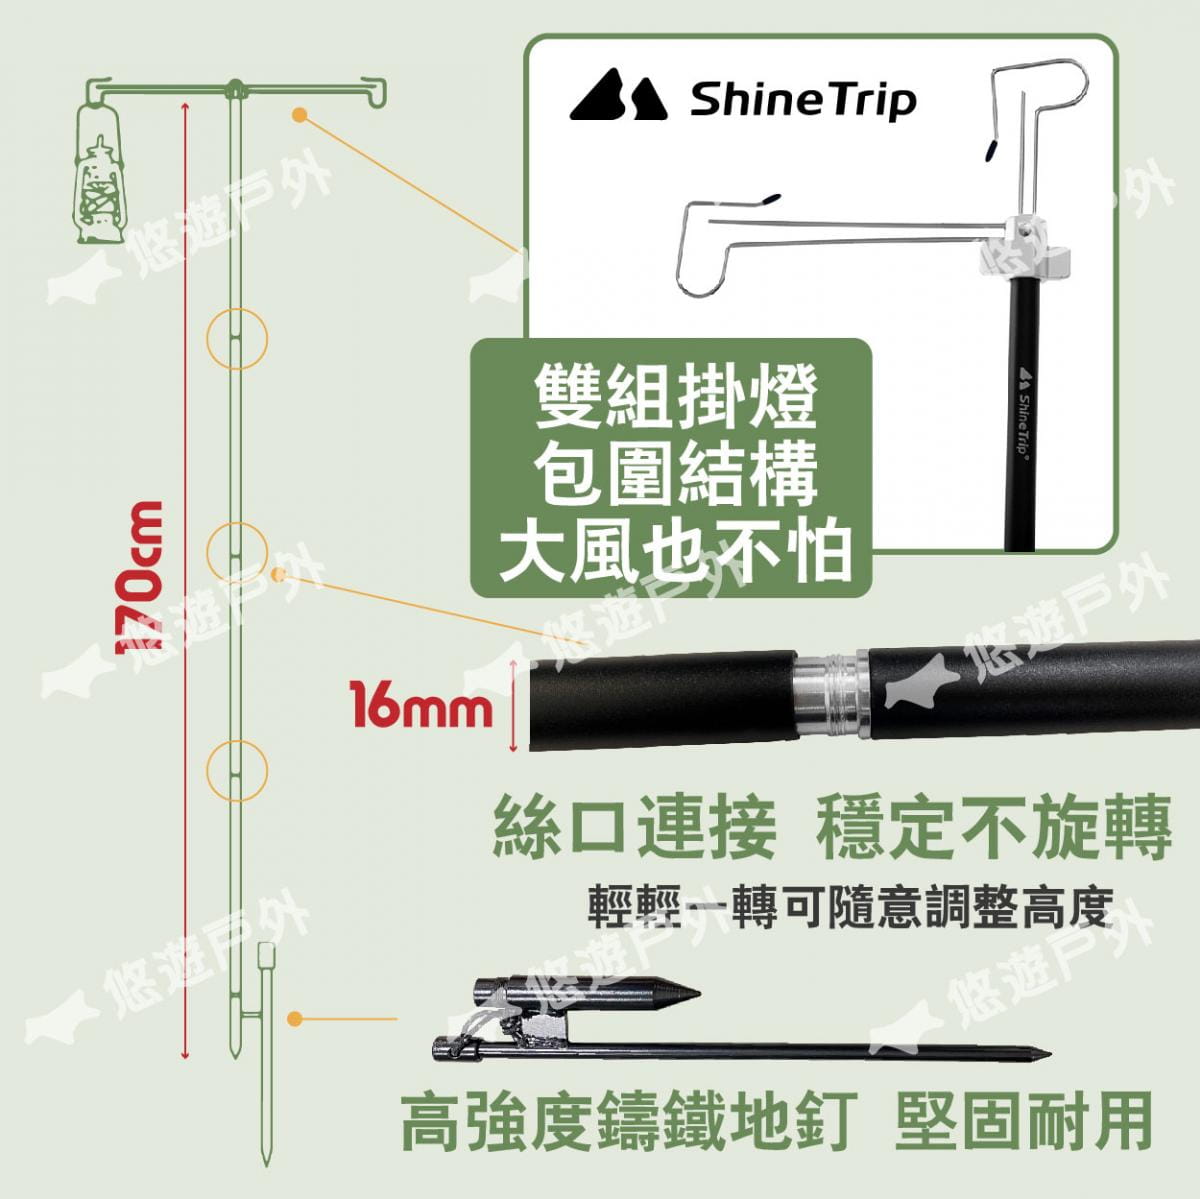 【Shine Trip 山趣】雲翼燈架套裝 16mm燈架 悠遊戶外 5